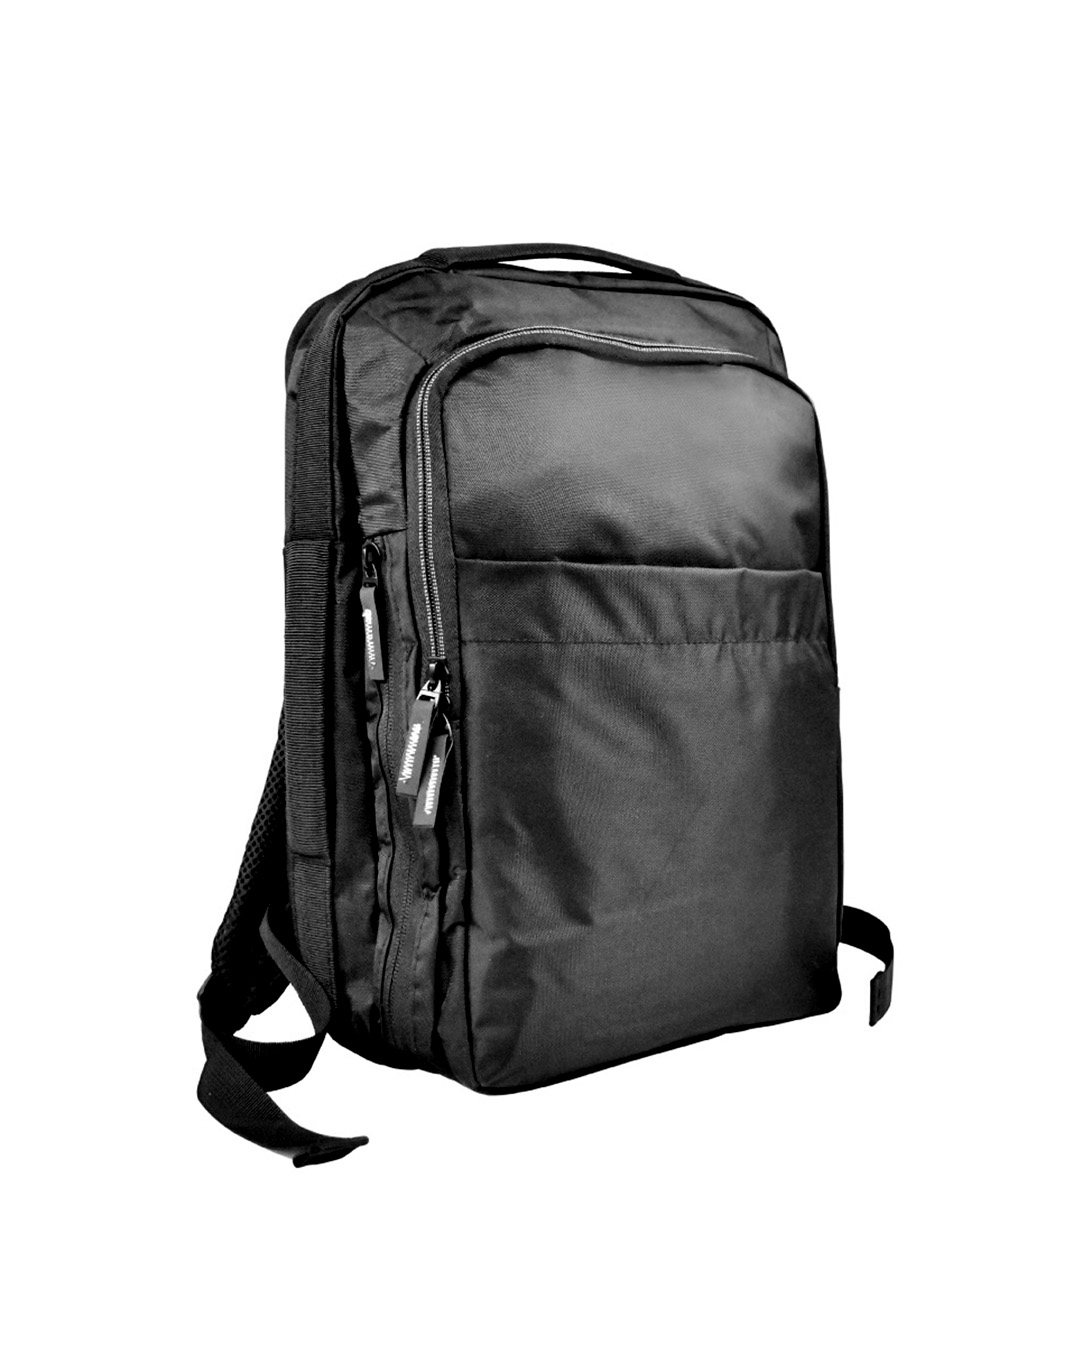 B7005 - Peak Performance Backpack - Ecorite